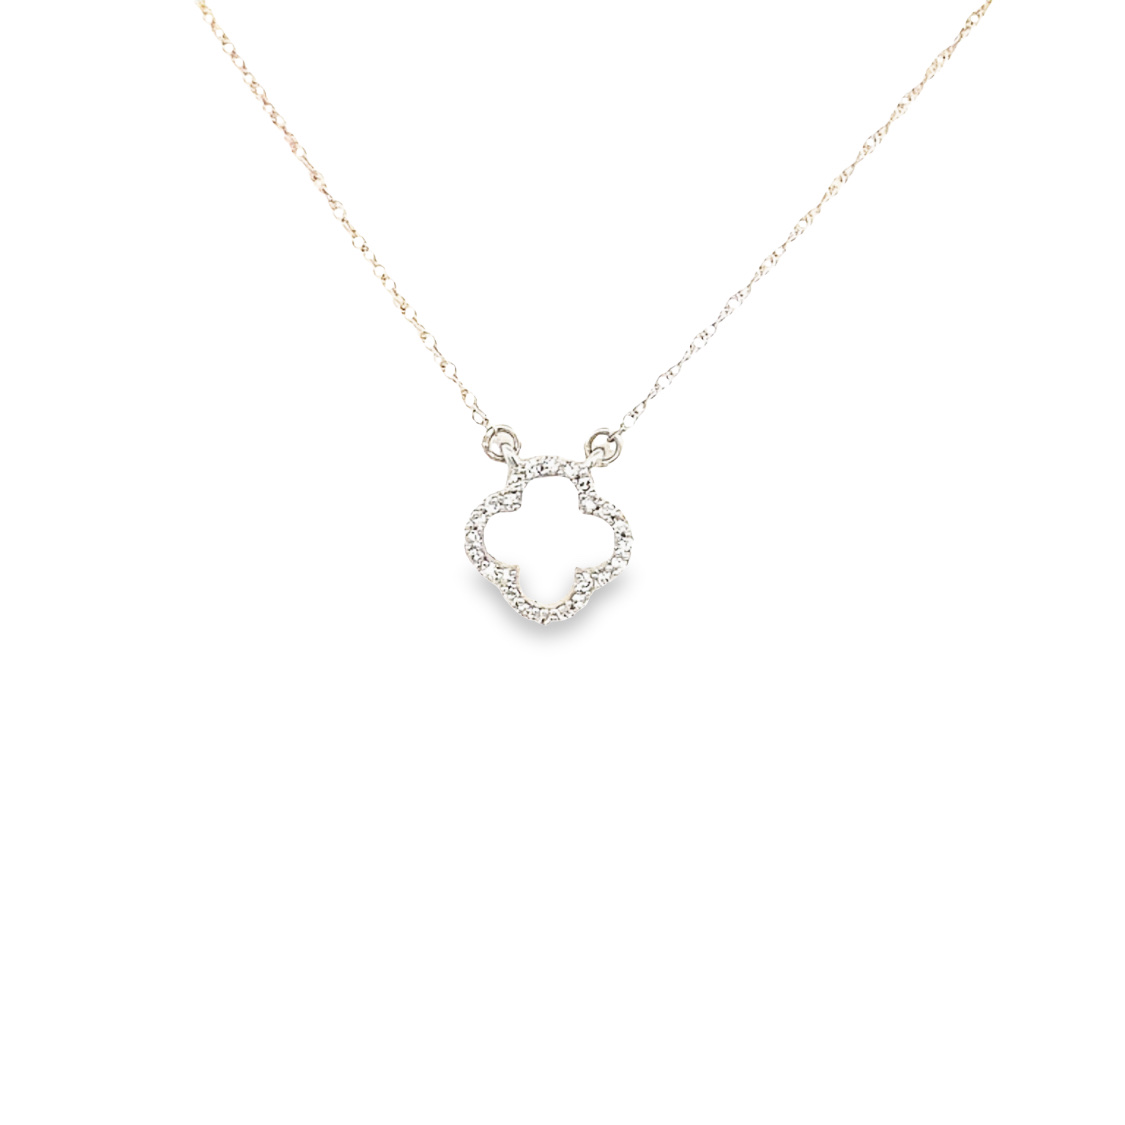 10 Karat White Gold Diamond Necklace Measuring 18 Inches